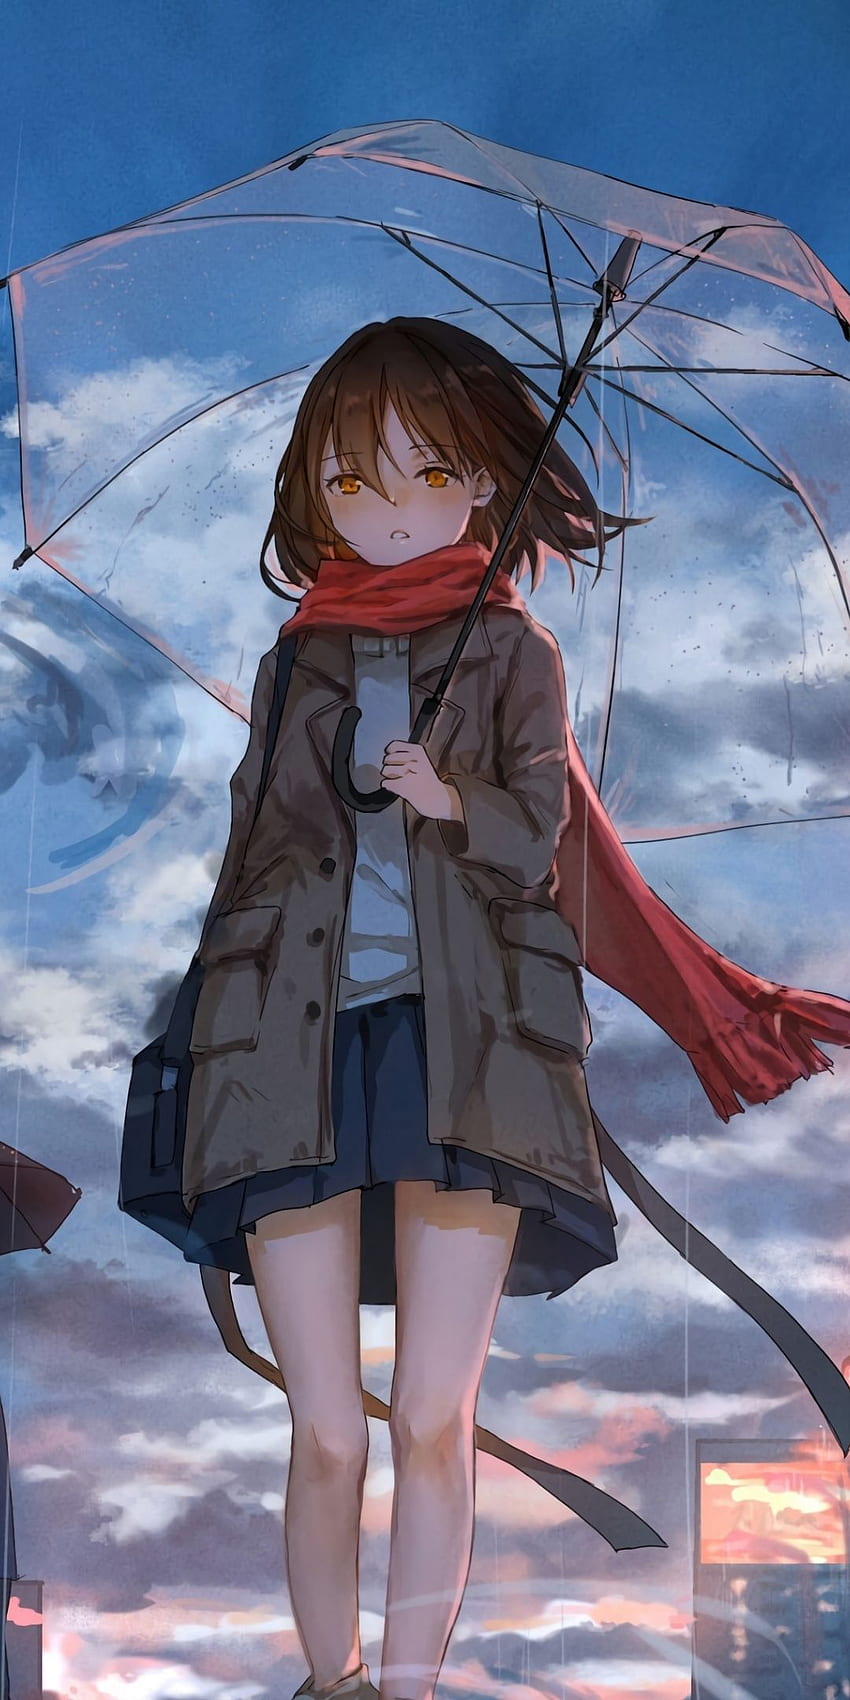 Wallpaper Sad Anime Girl Umbrella Anime Digital Art Art Artist  Background  Download Free Image